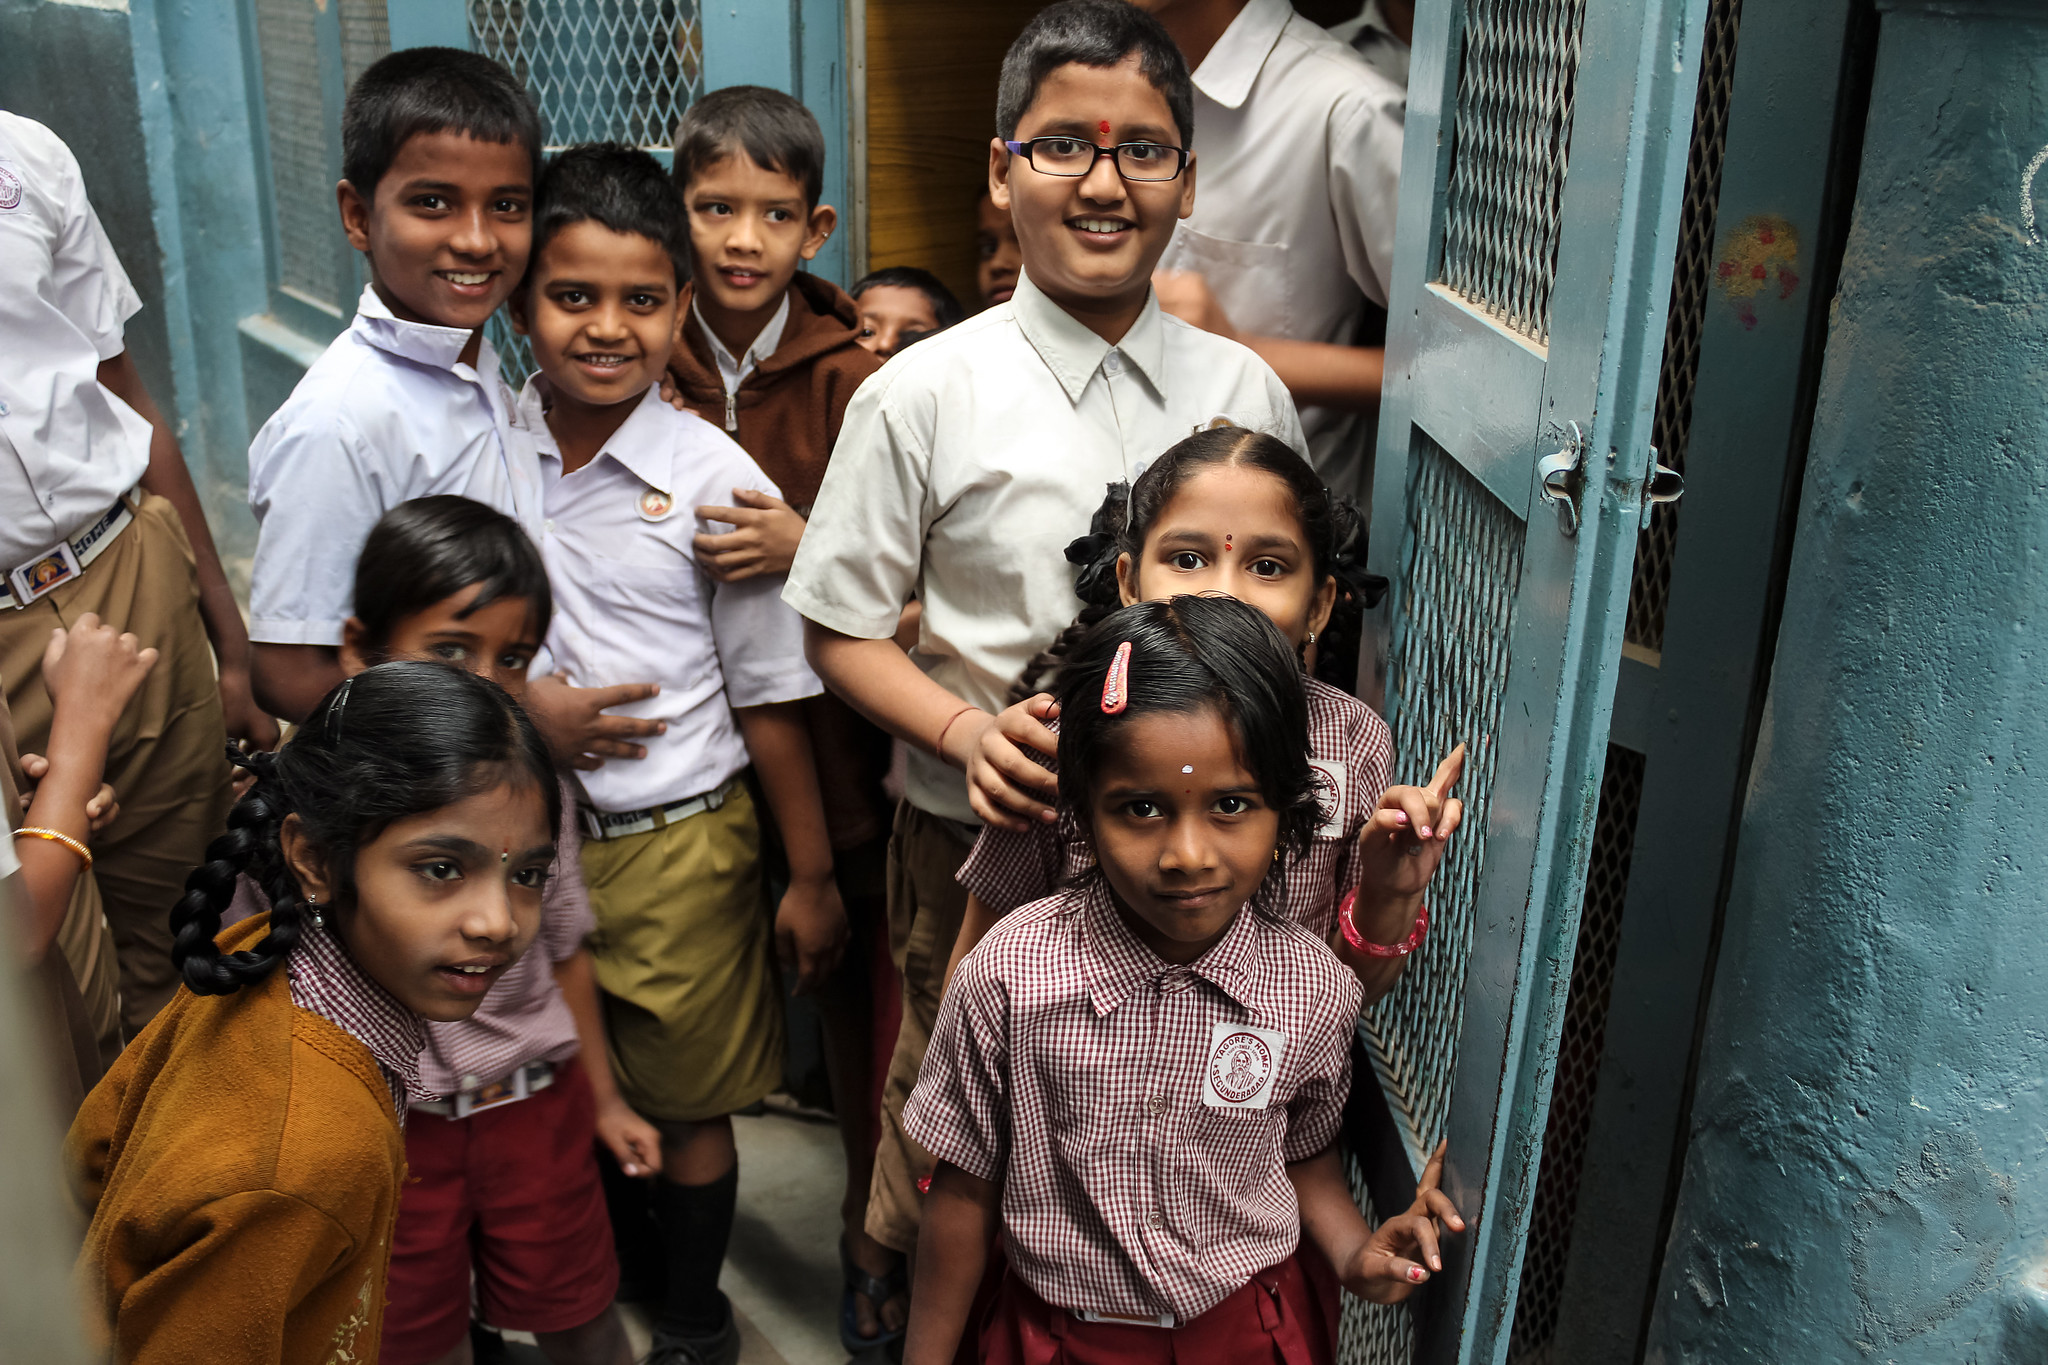 Photo of primary school children smiling